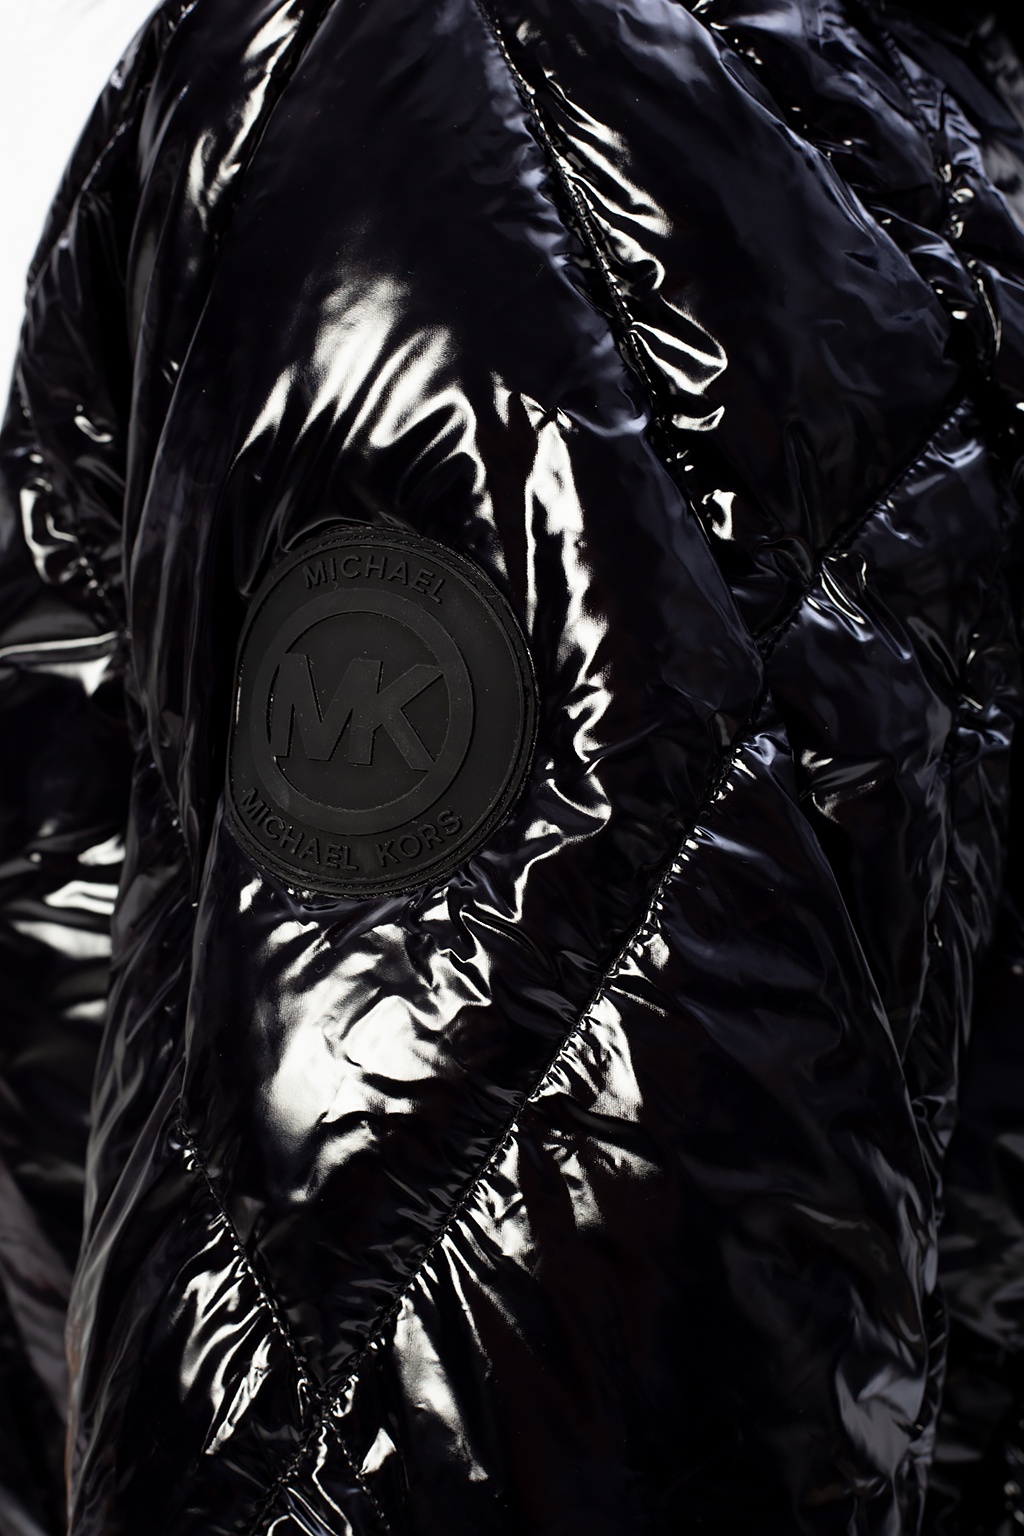 Black Quilted jacket Michael Michael Kors - Vitkac France